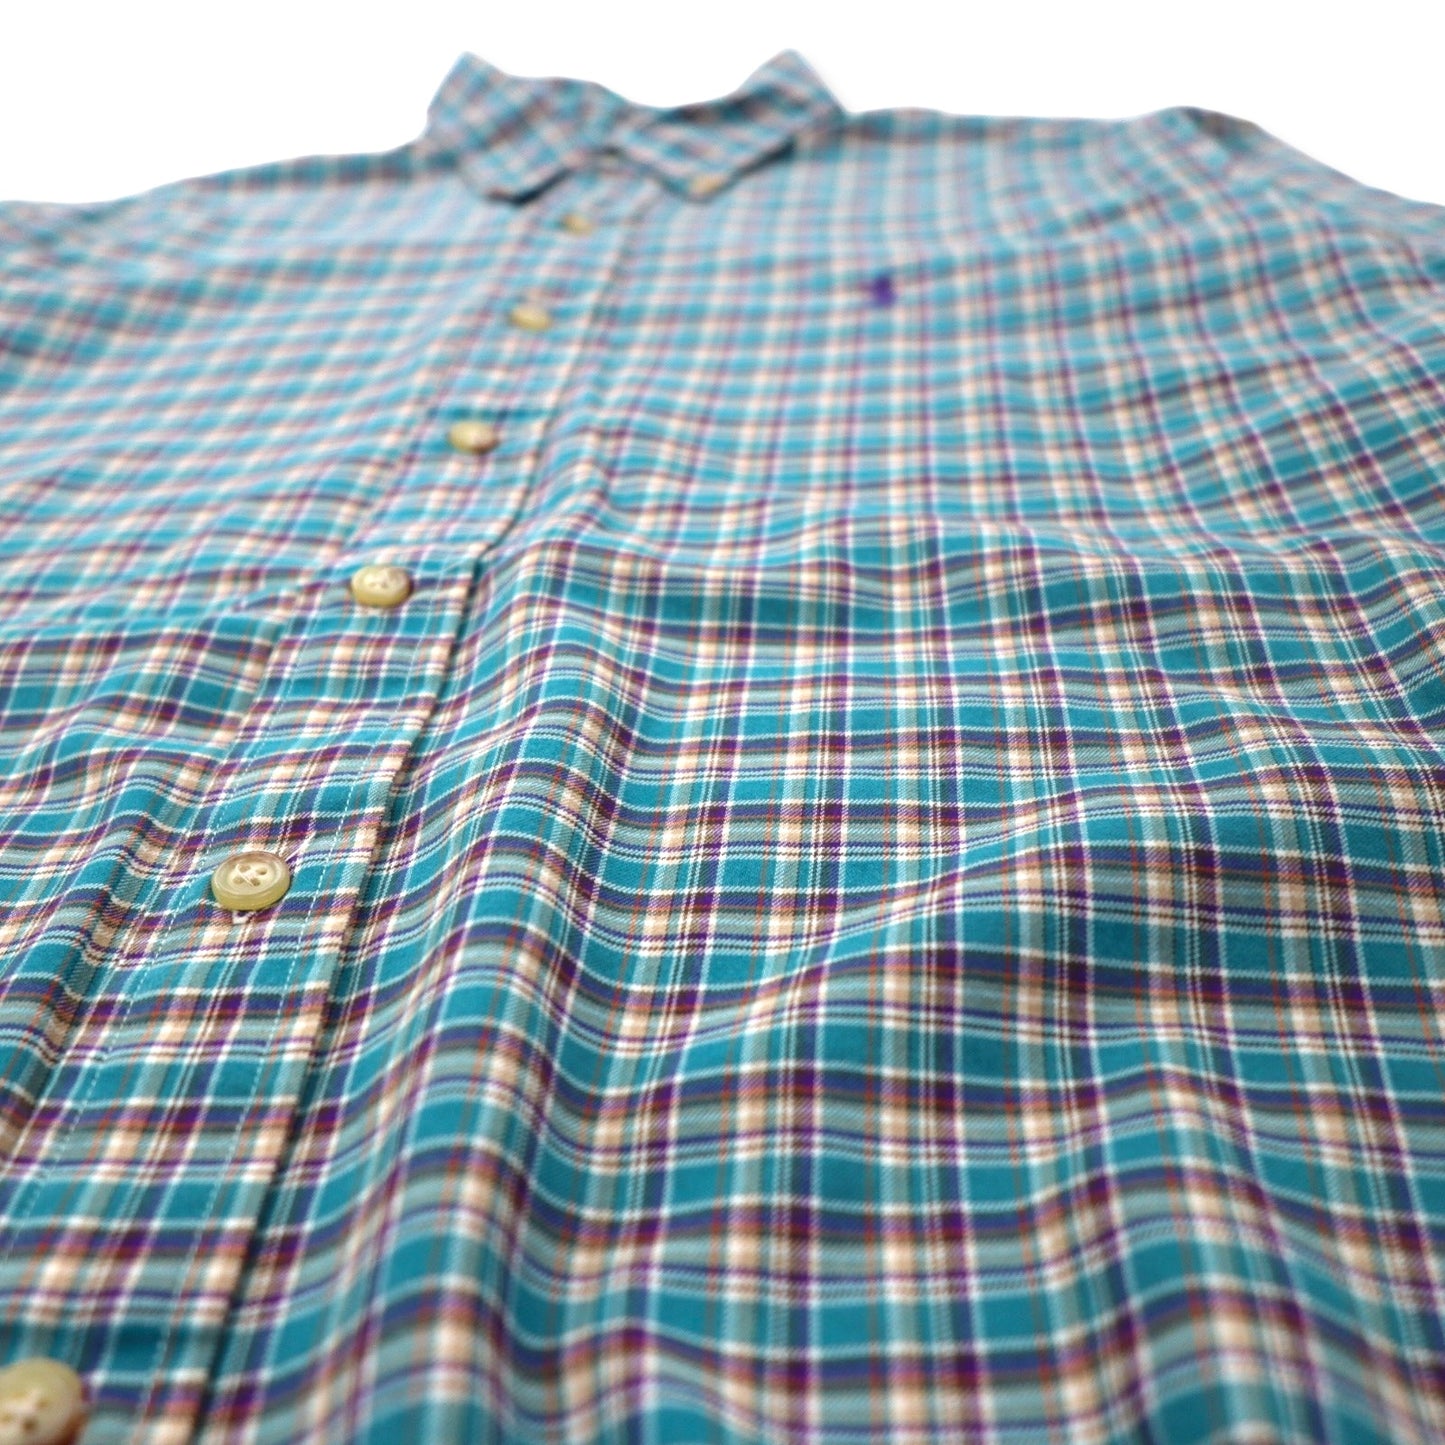 RALPH LAUREN ボタンダウンシャツ L グリーン チェック コットン スモールポニー刺繍 ビッグサイズ